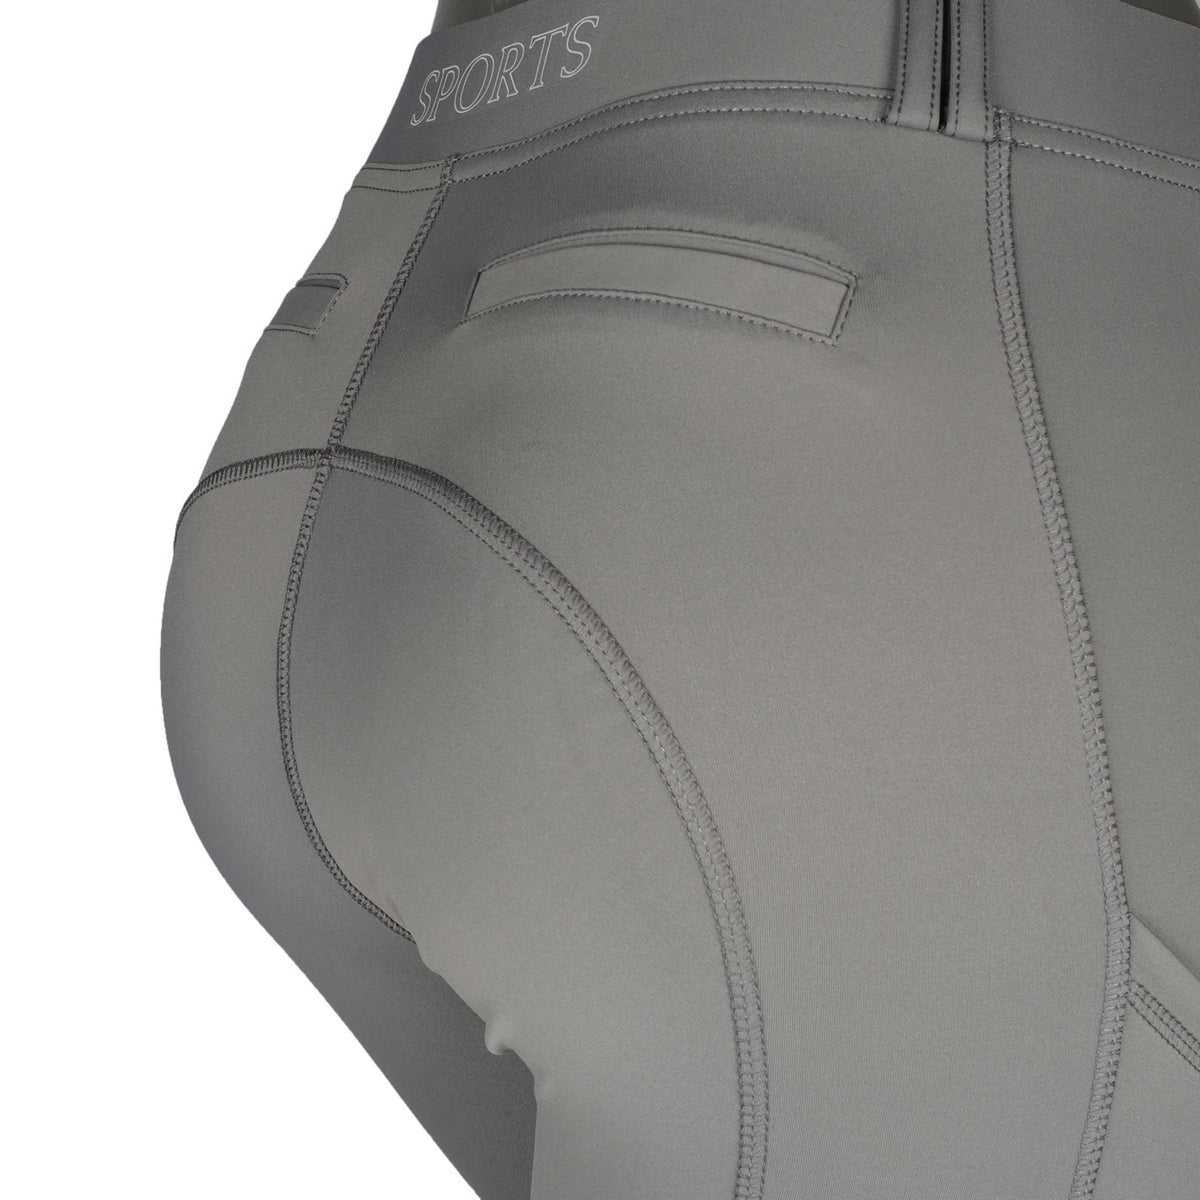 Schockemöhle Reitleggings New Pocket Knie Grip Slate Grey